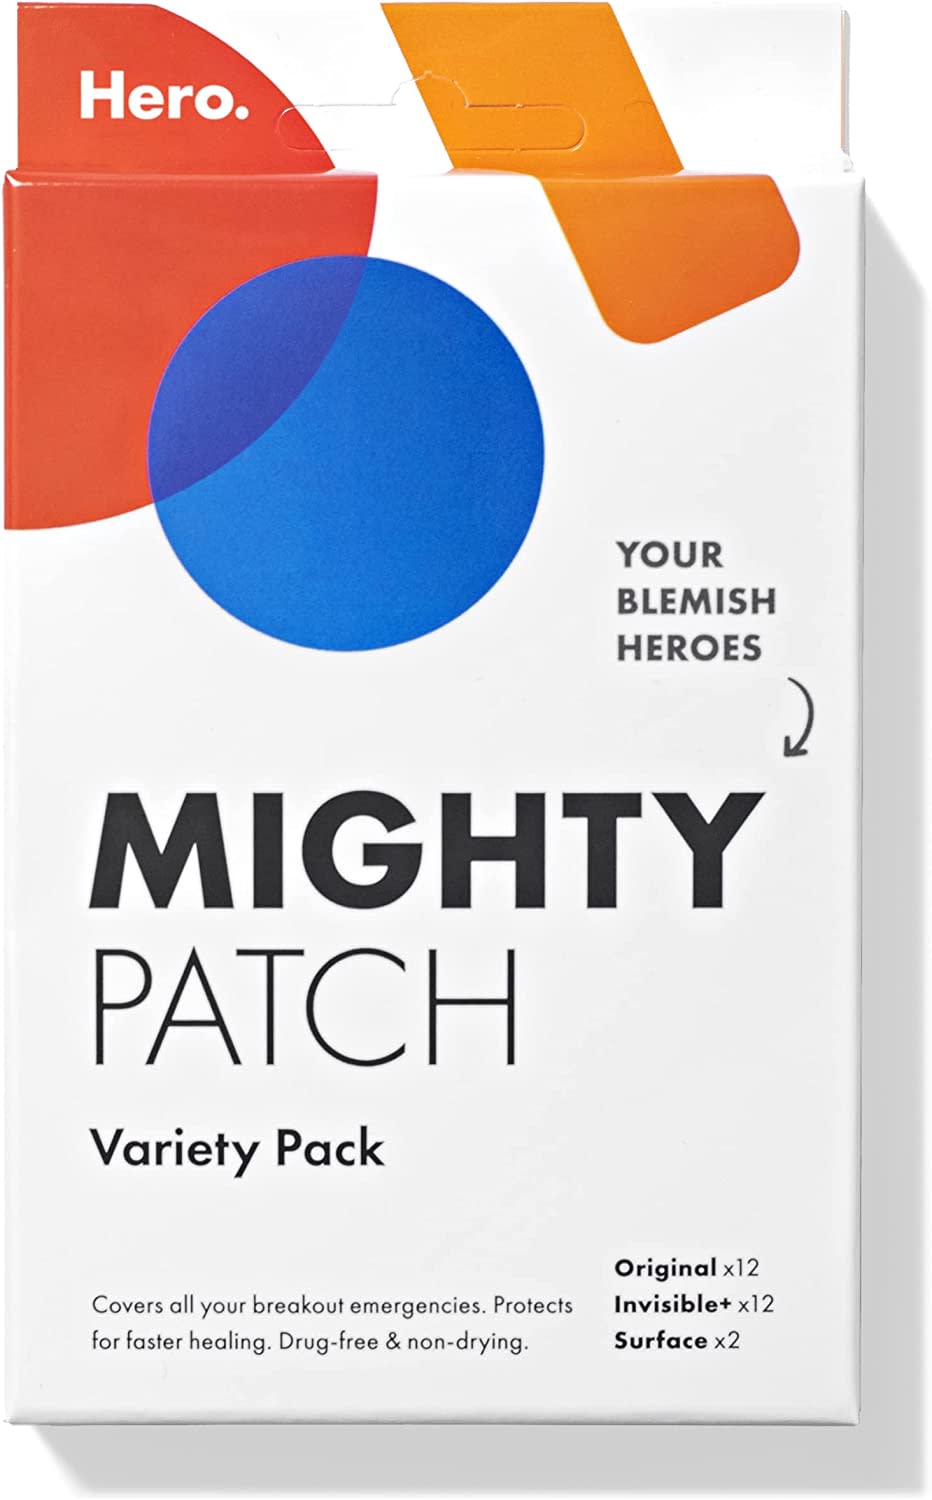 Hero Mighty Patch Variety Pack (Photo via Amazon)